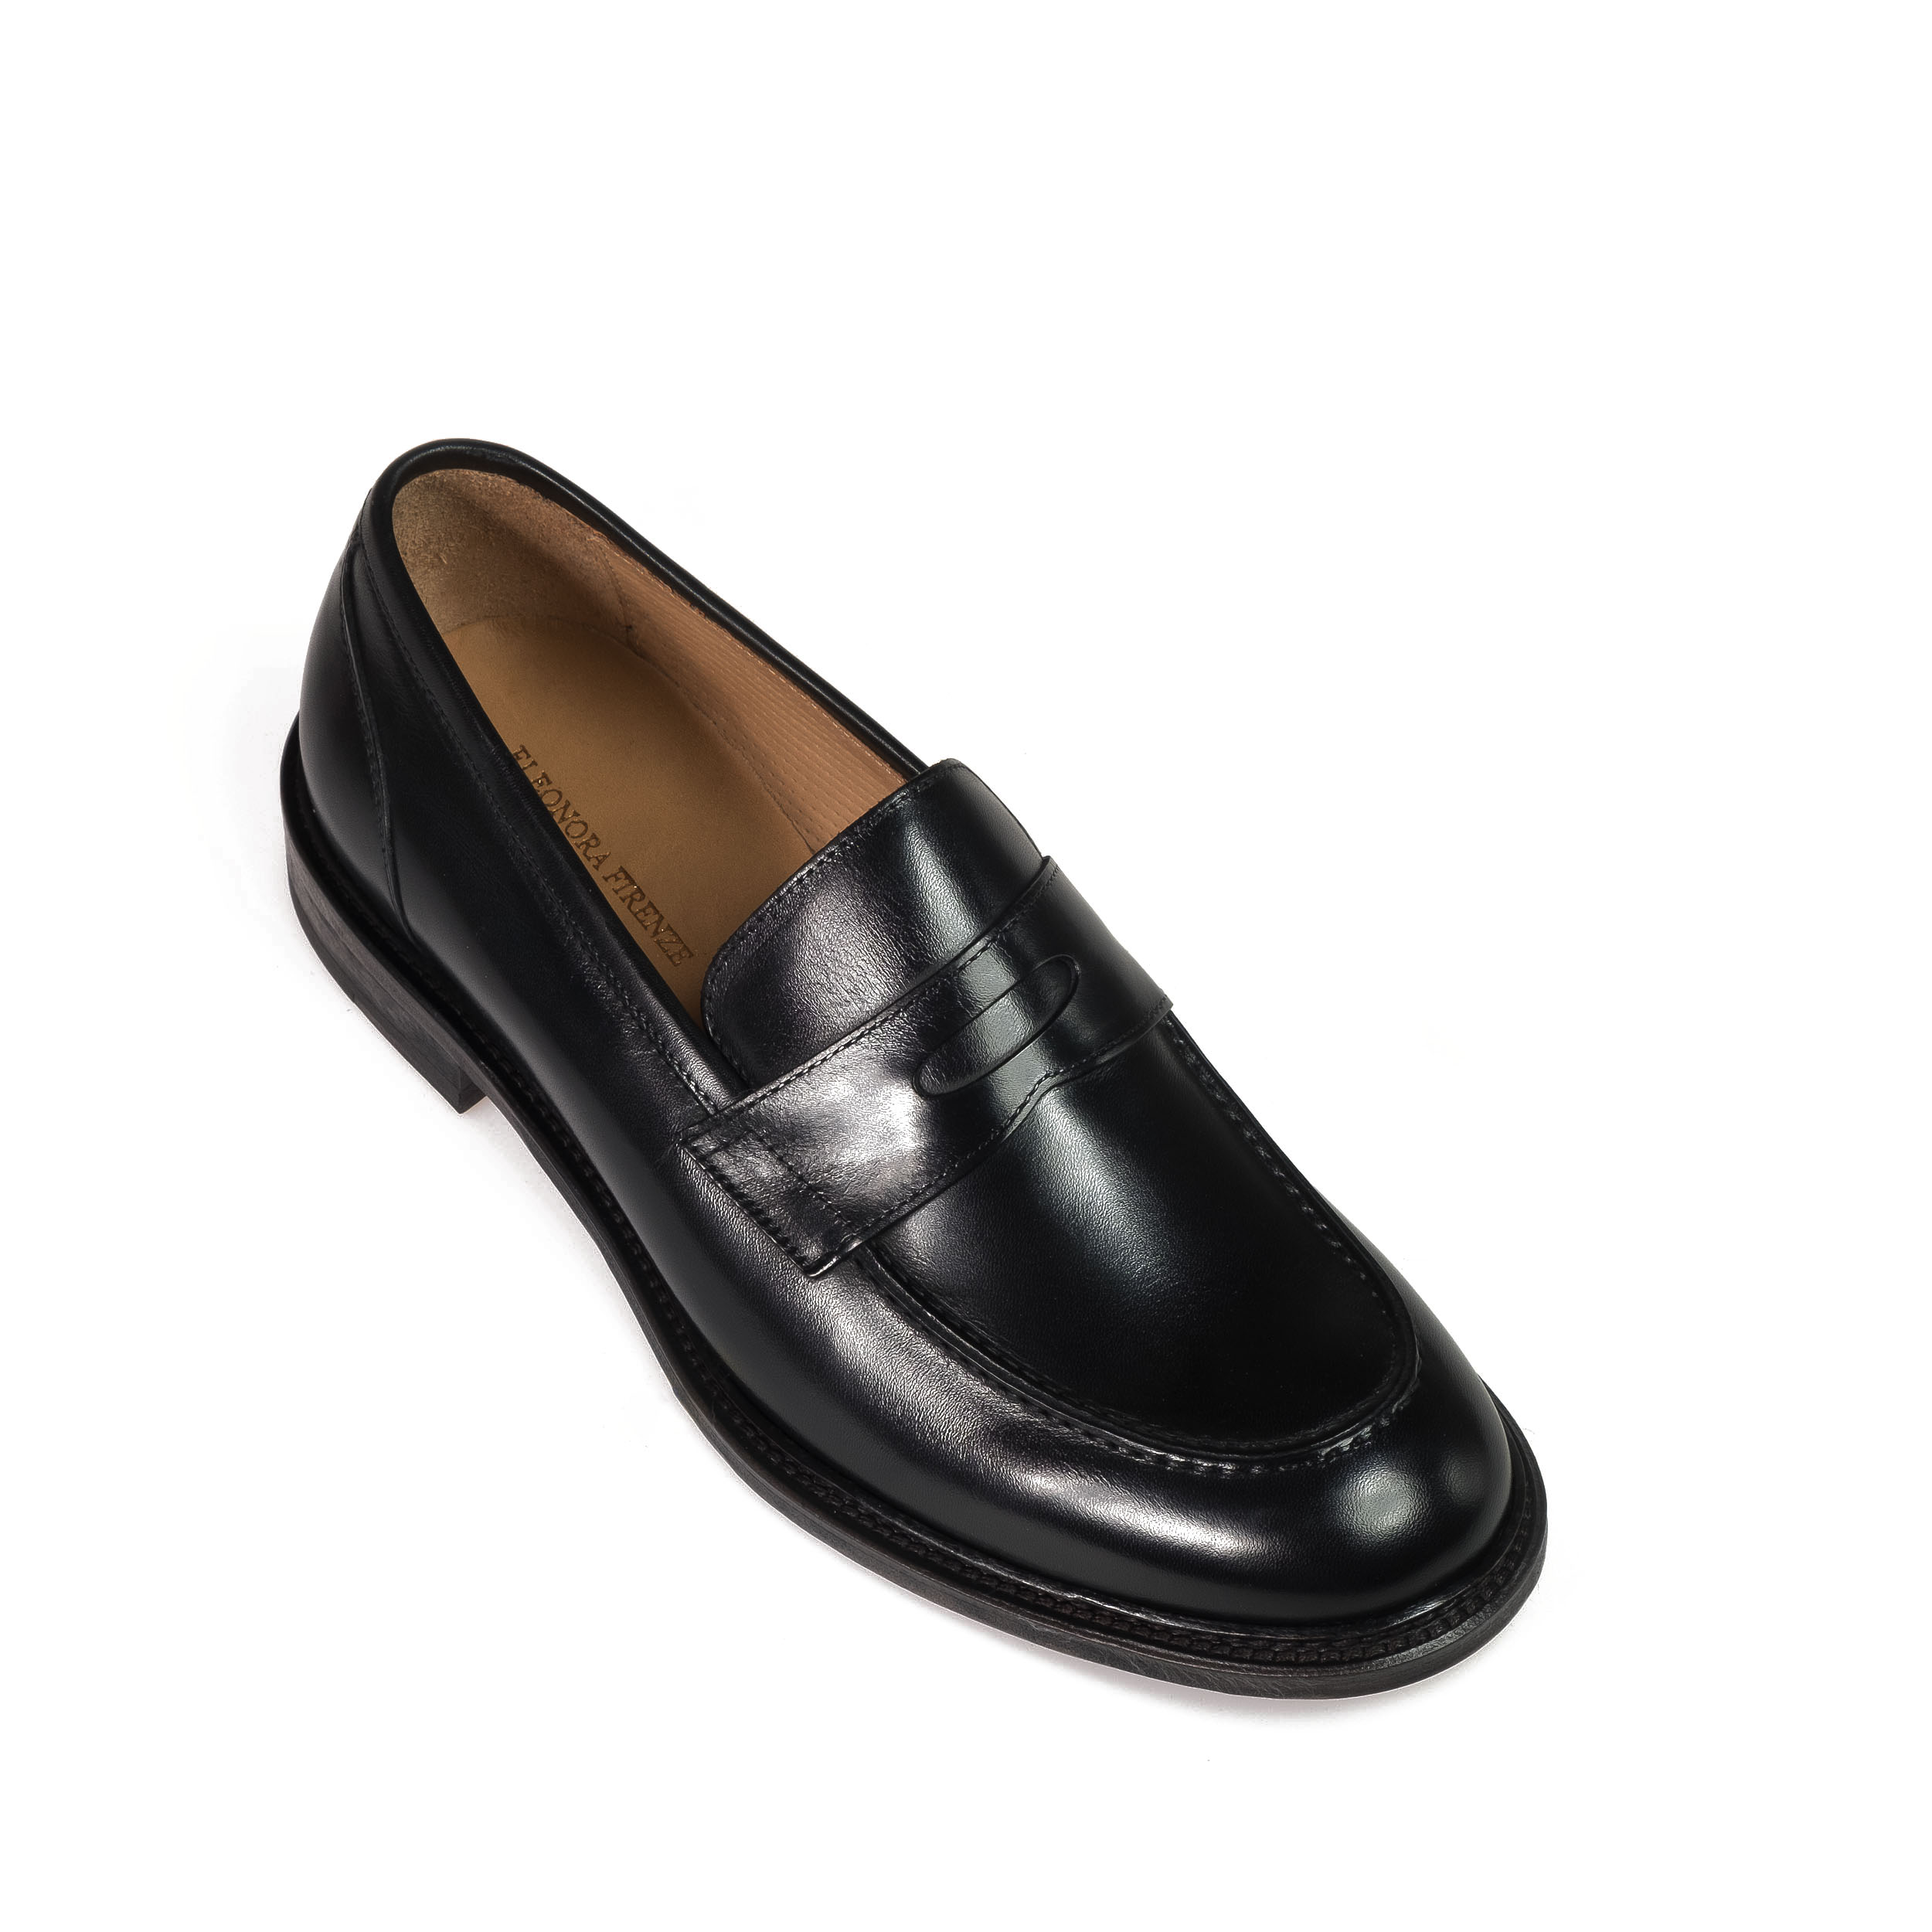 Elegant men calf leather penny loafer black color hand-sewn made in ...